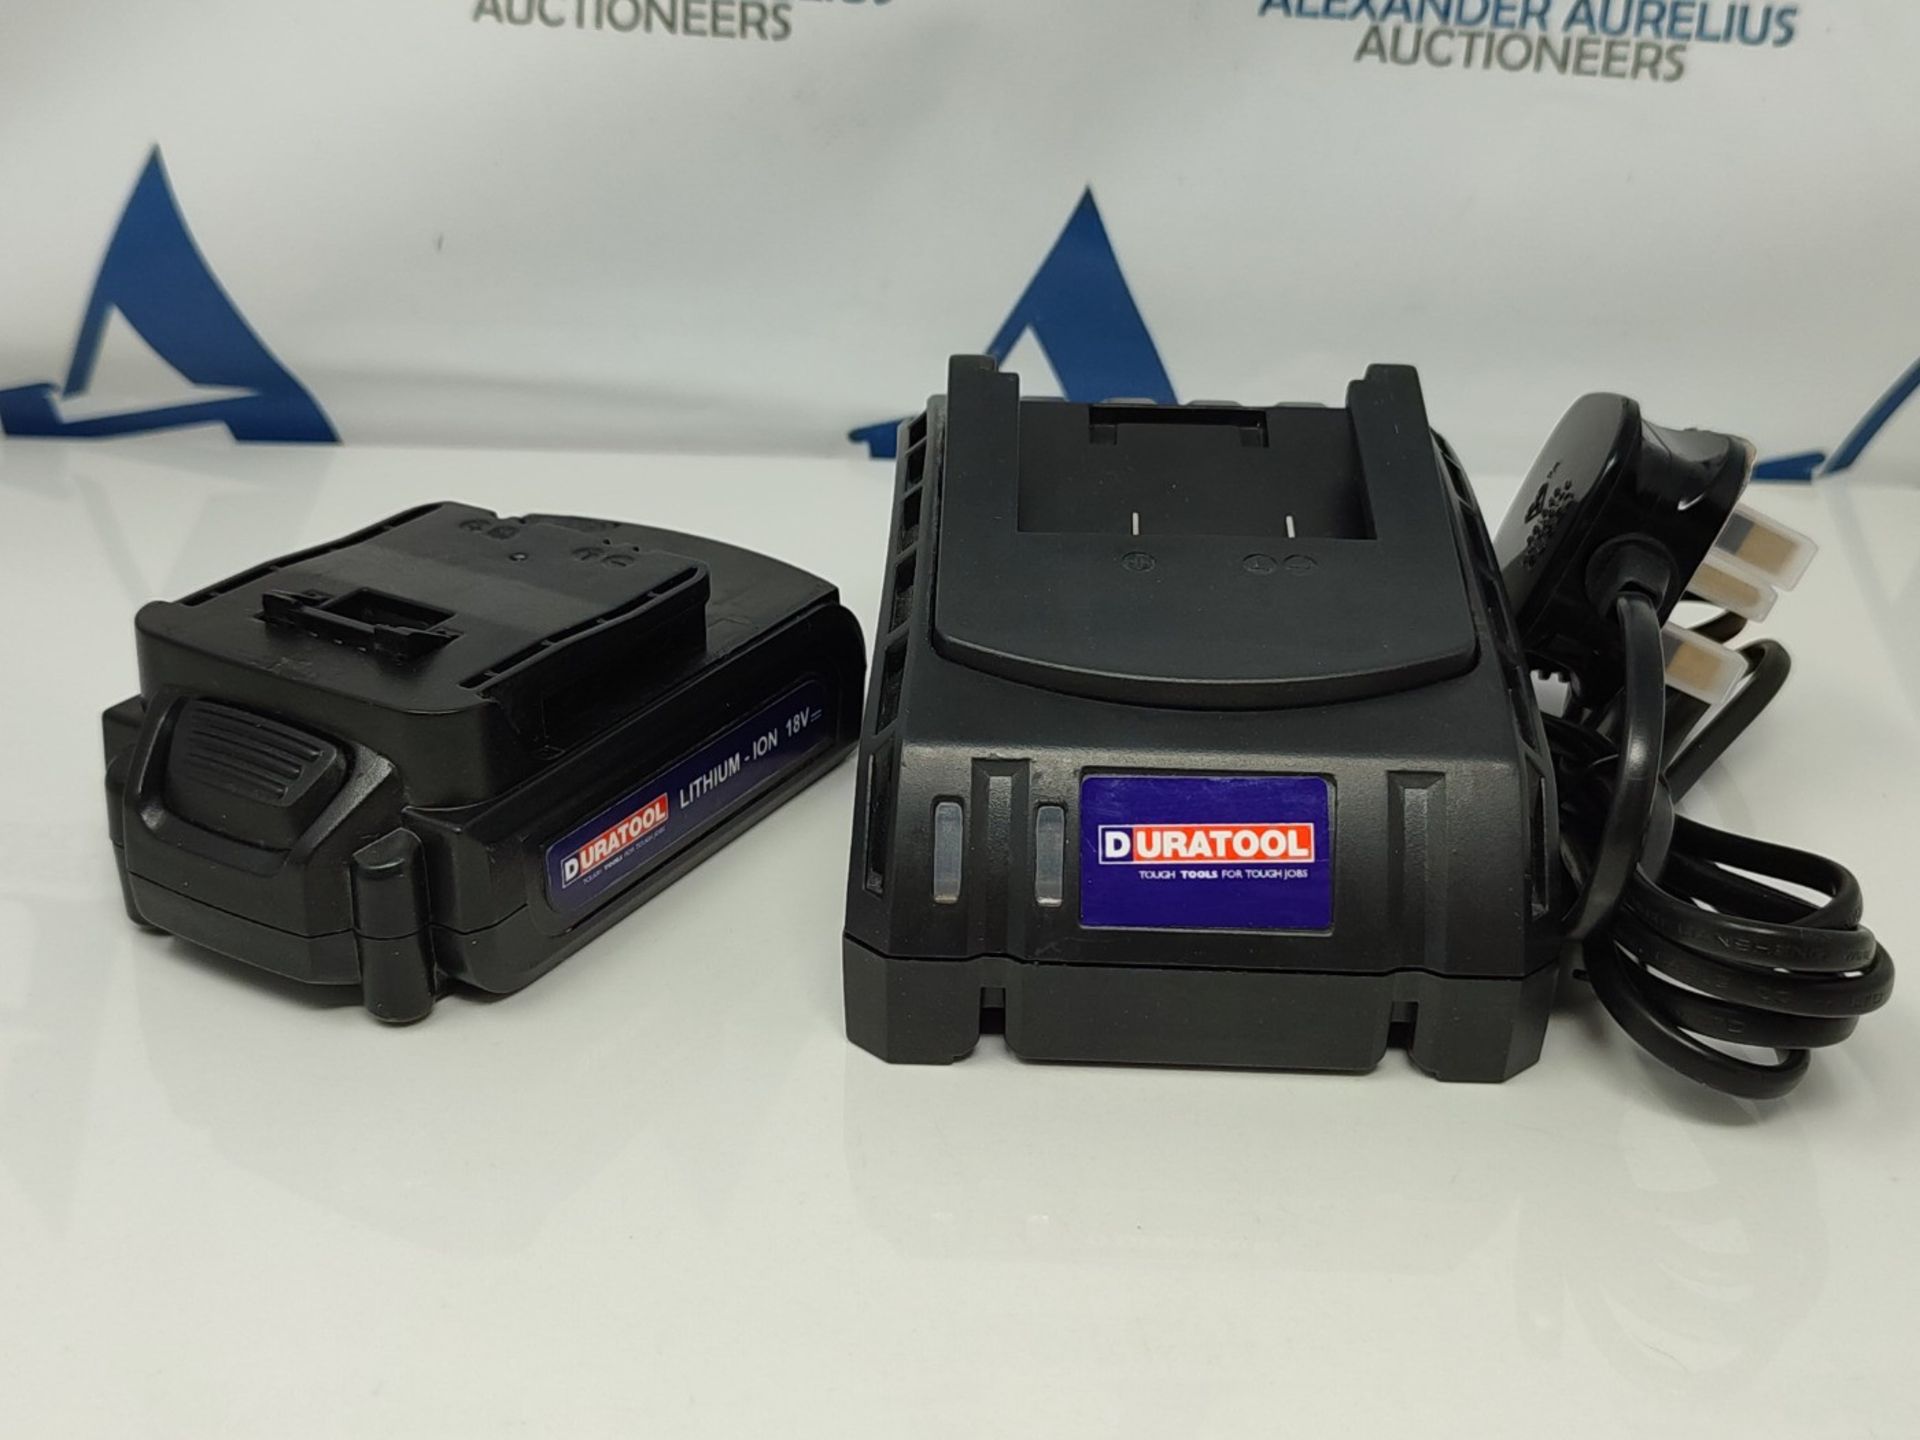 RRP £67.00 Duratool D03222 18V 2Ah Li-Ion Power Tool Battery & Charger Kit, black - Image 2 of 2